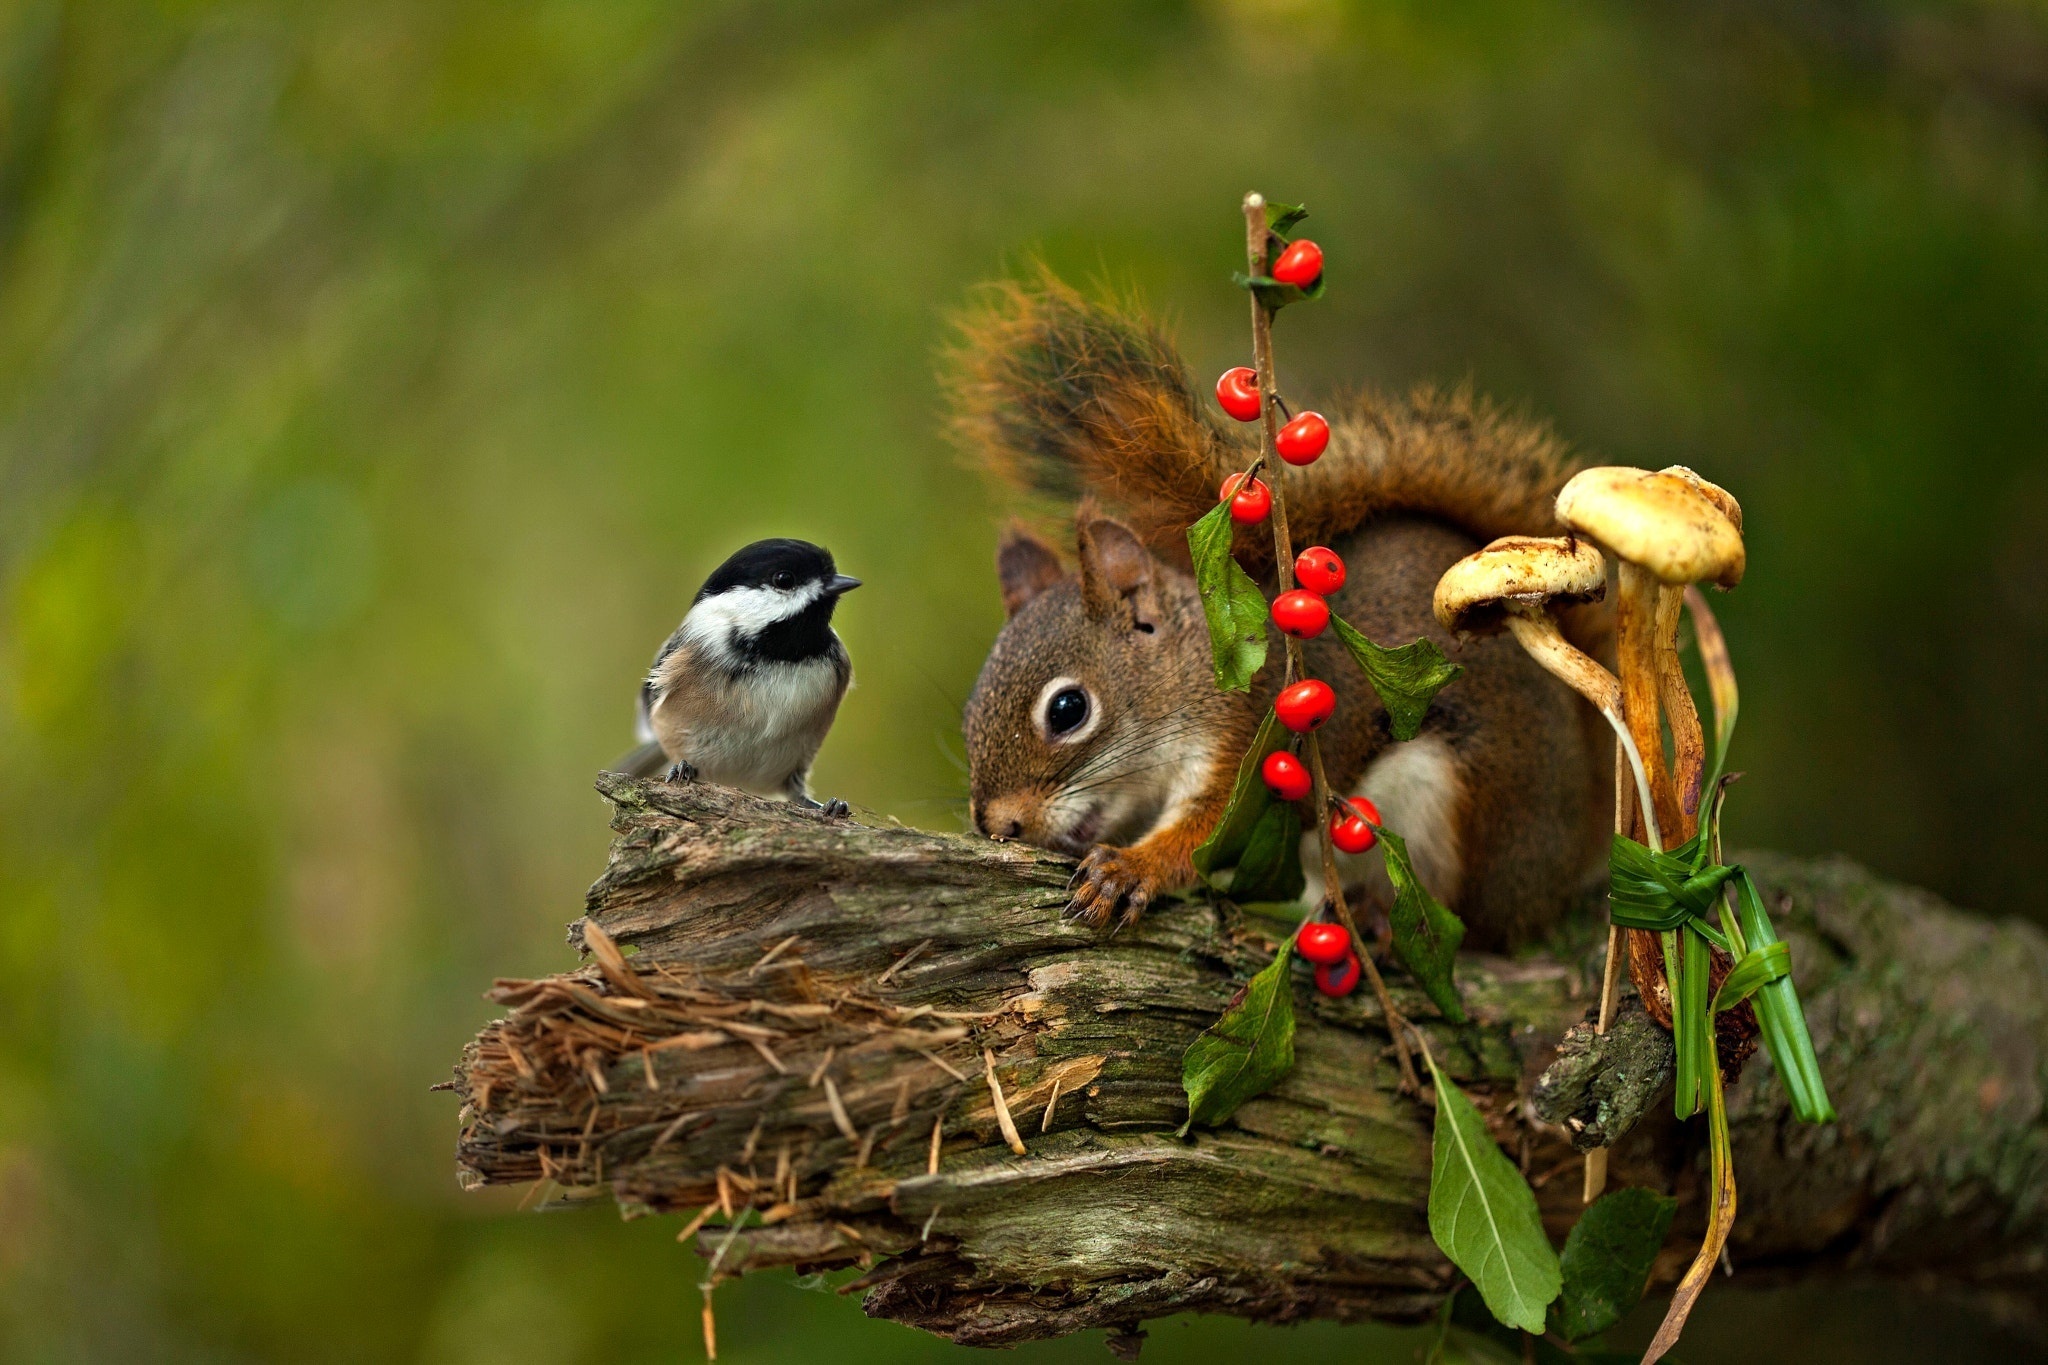 Image: Bird, chickadee, squirrel, rodent, gnaws, wood, berries, mushrooms